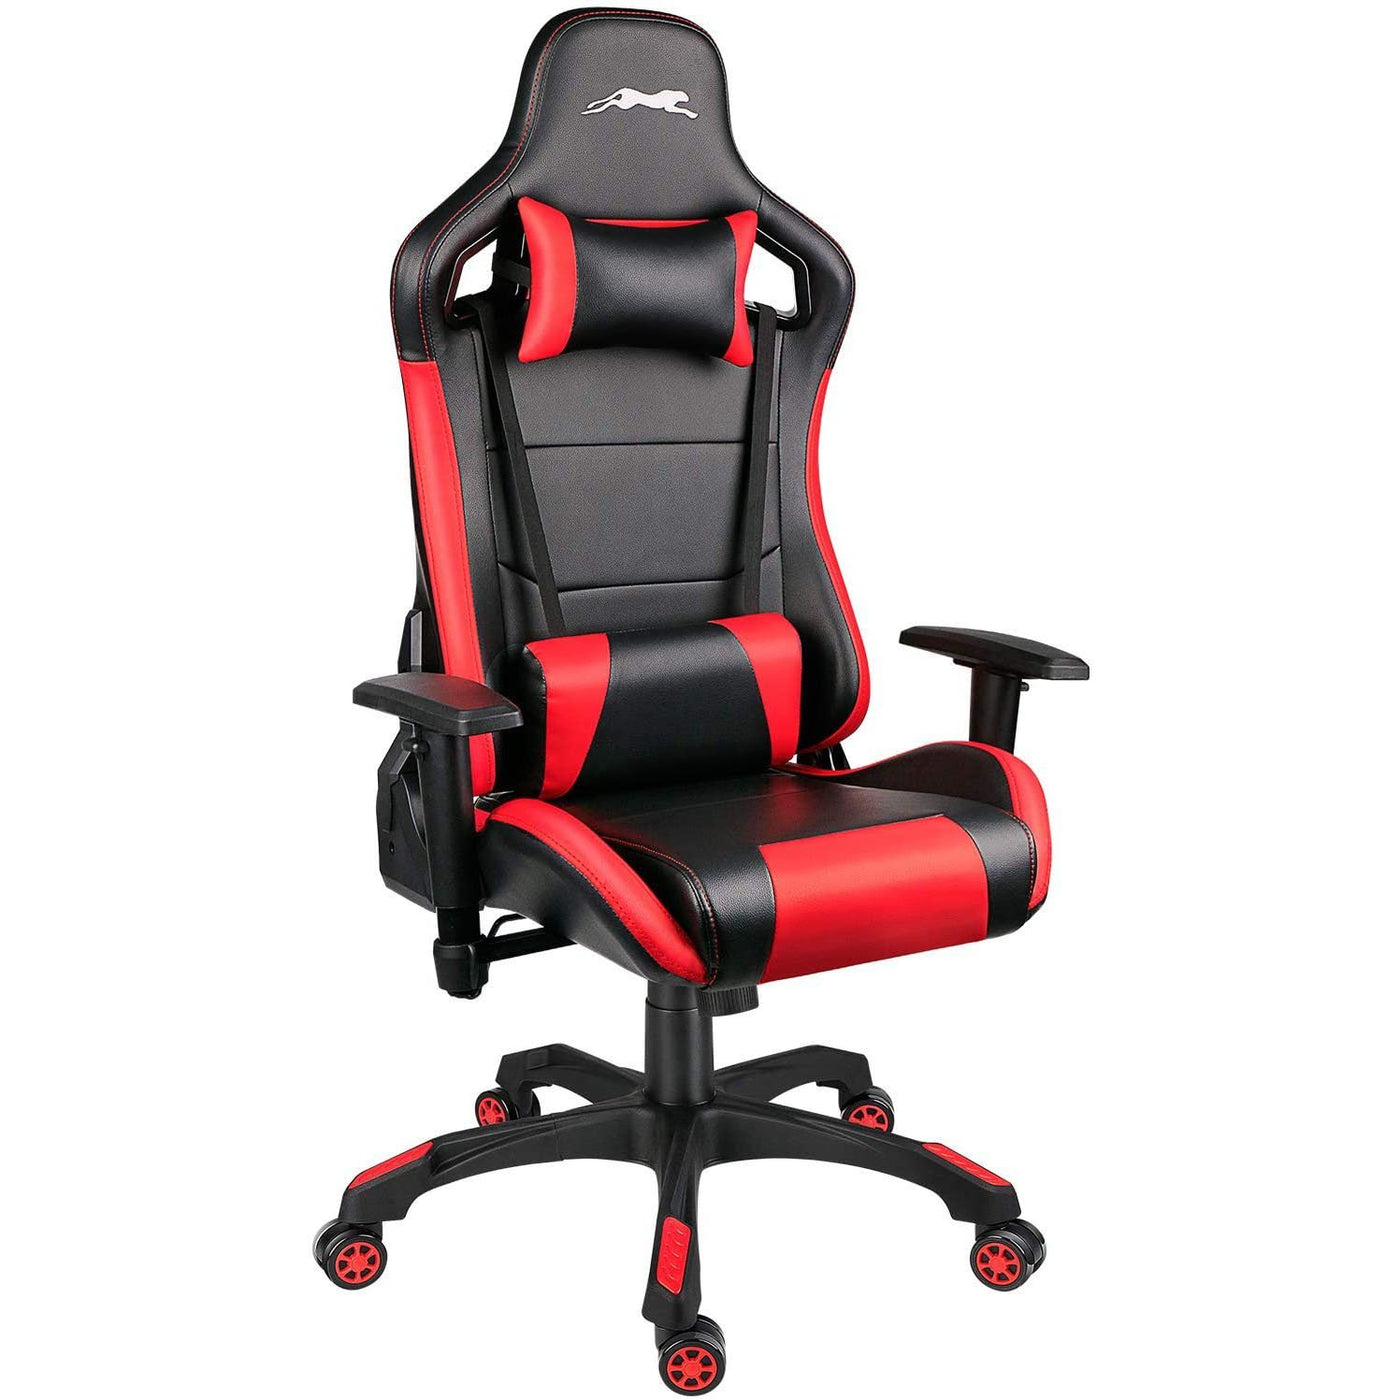 Swive Gaming Chair with Adjustable Armrest Red - HOMEKOKO